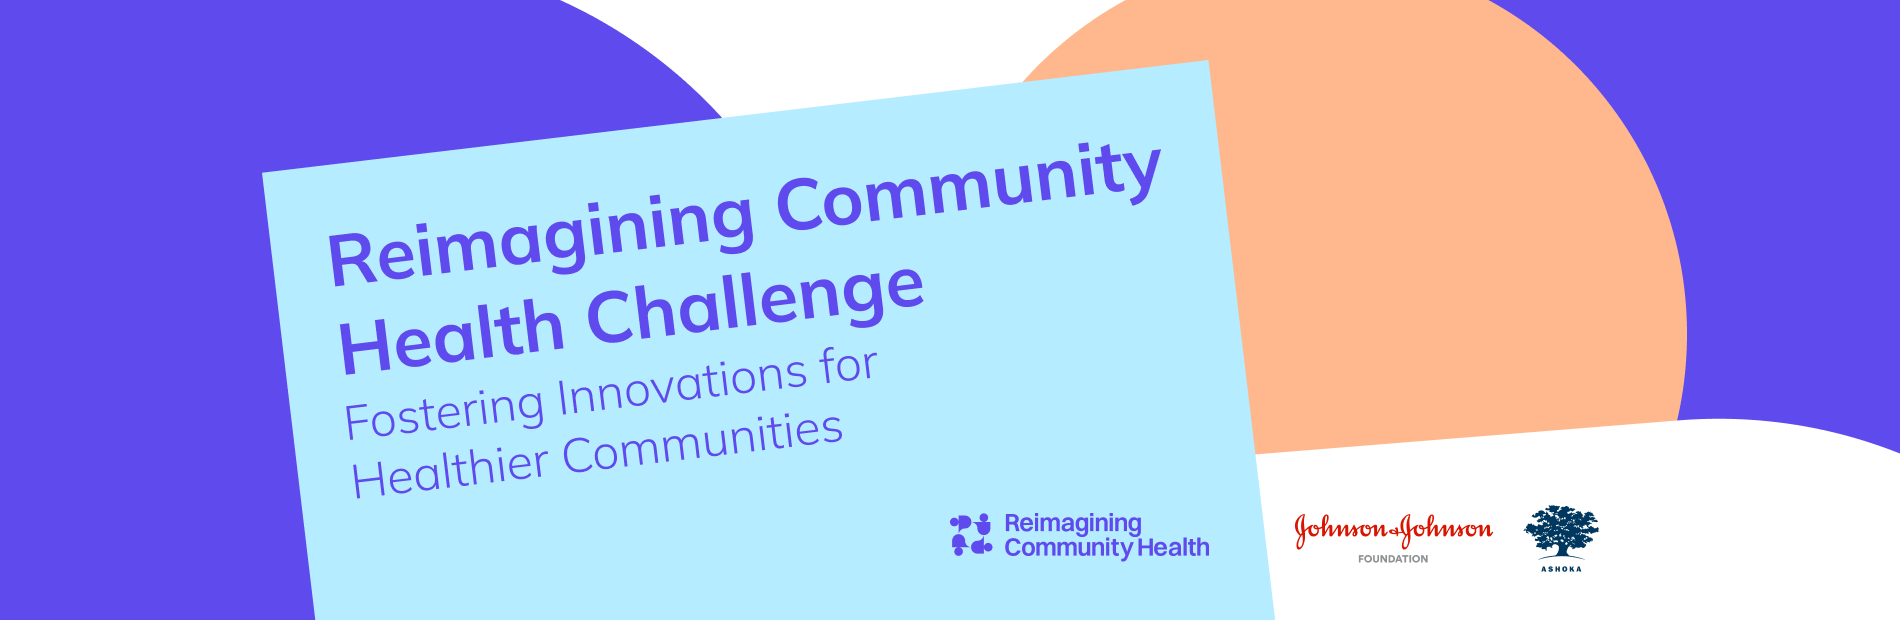 Reimagining Community Health Challenge - banner